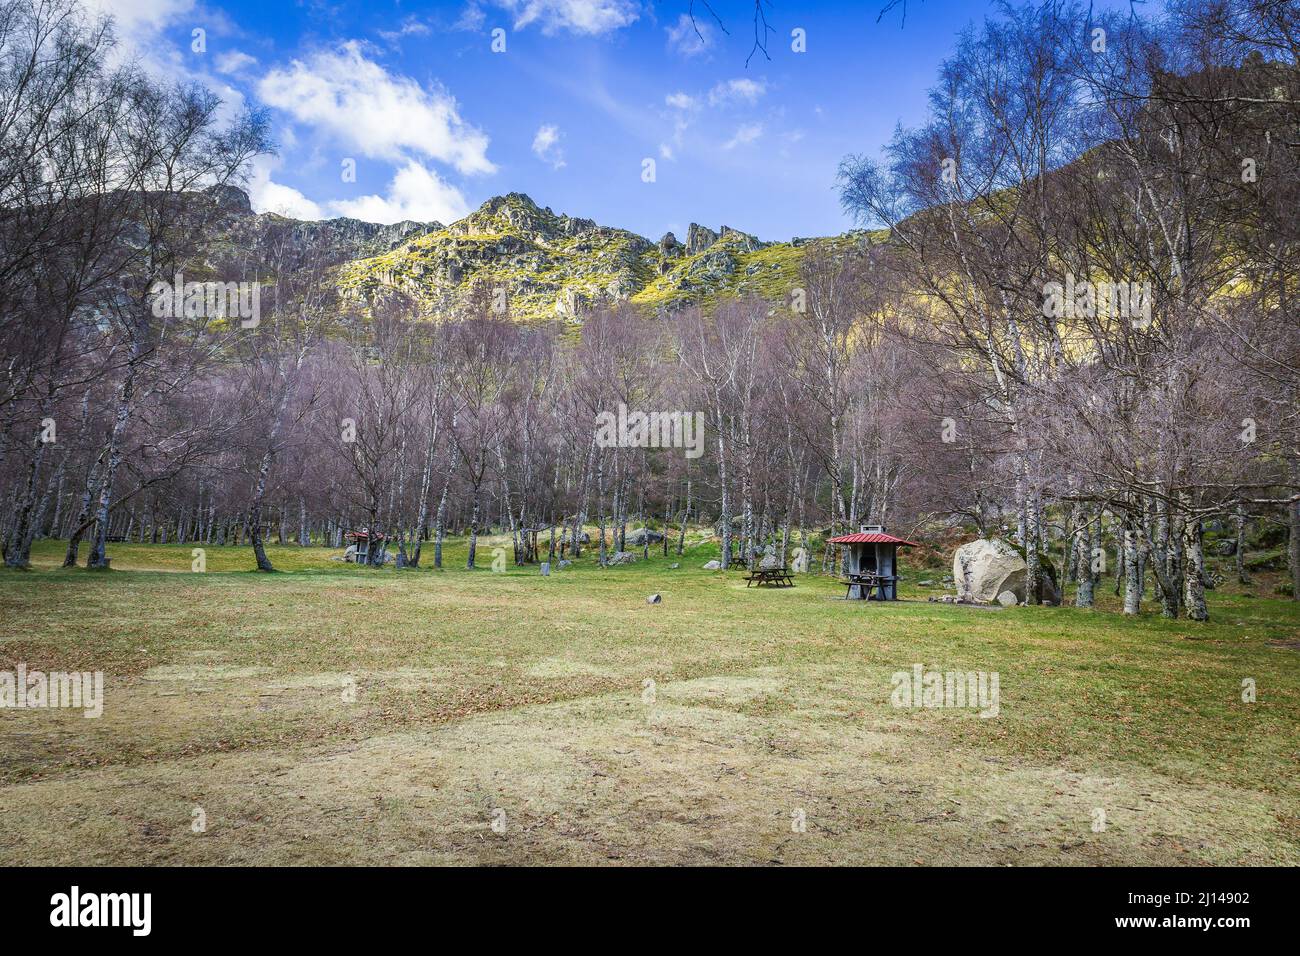 Mountain landscape in the place of Covao da Ametade located in the Natural Park of Serra da Estrela Stock Photo